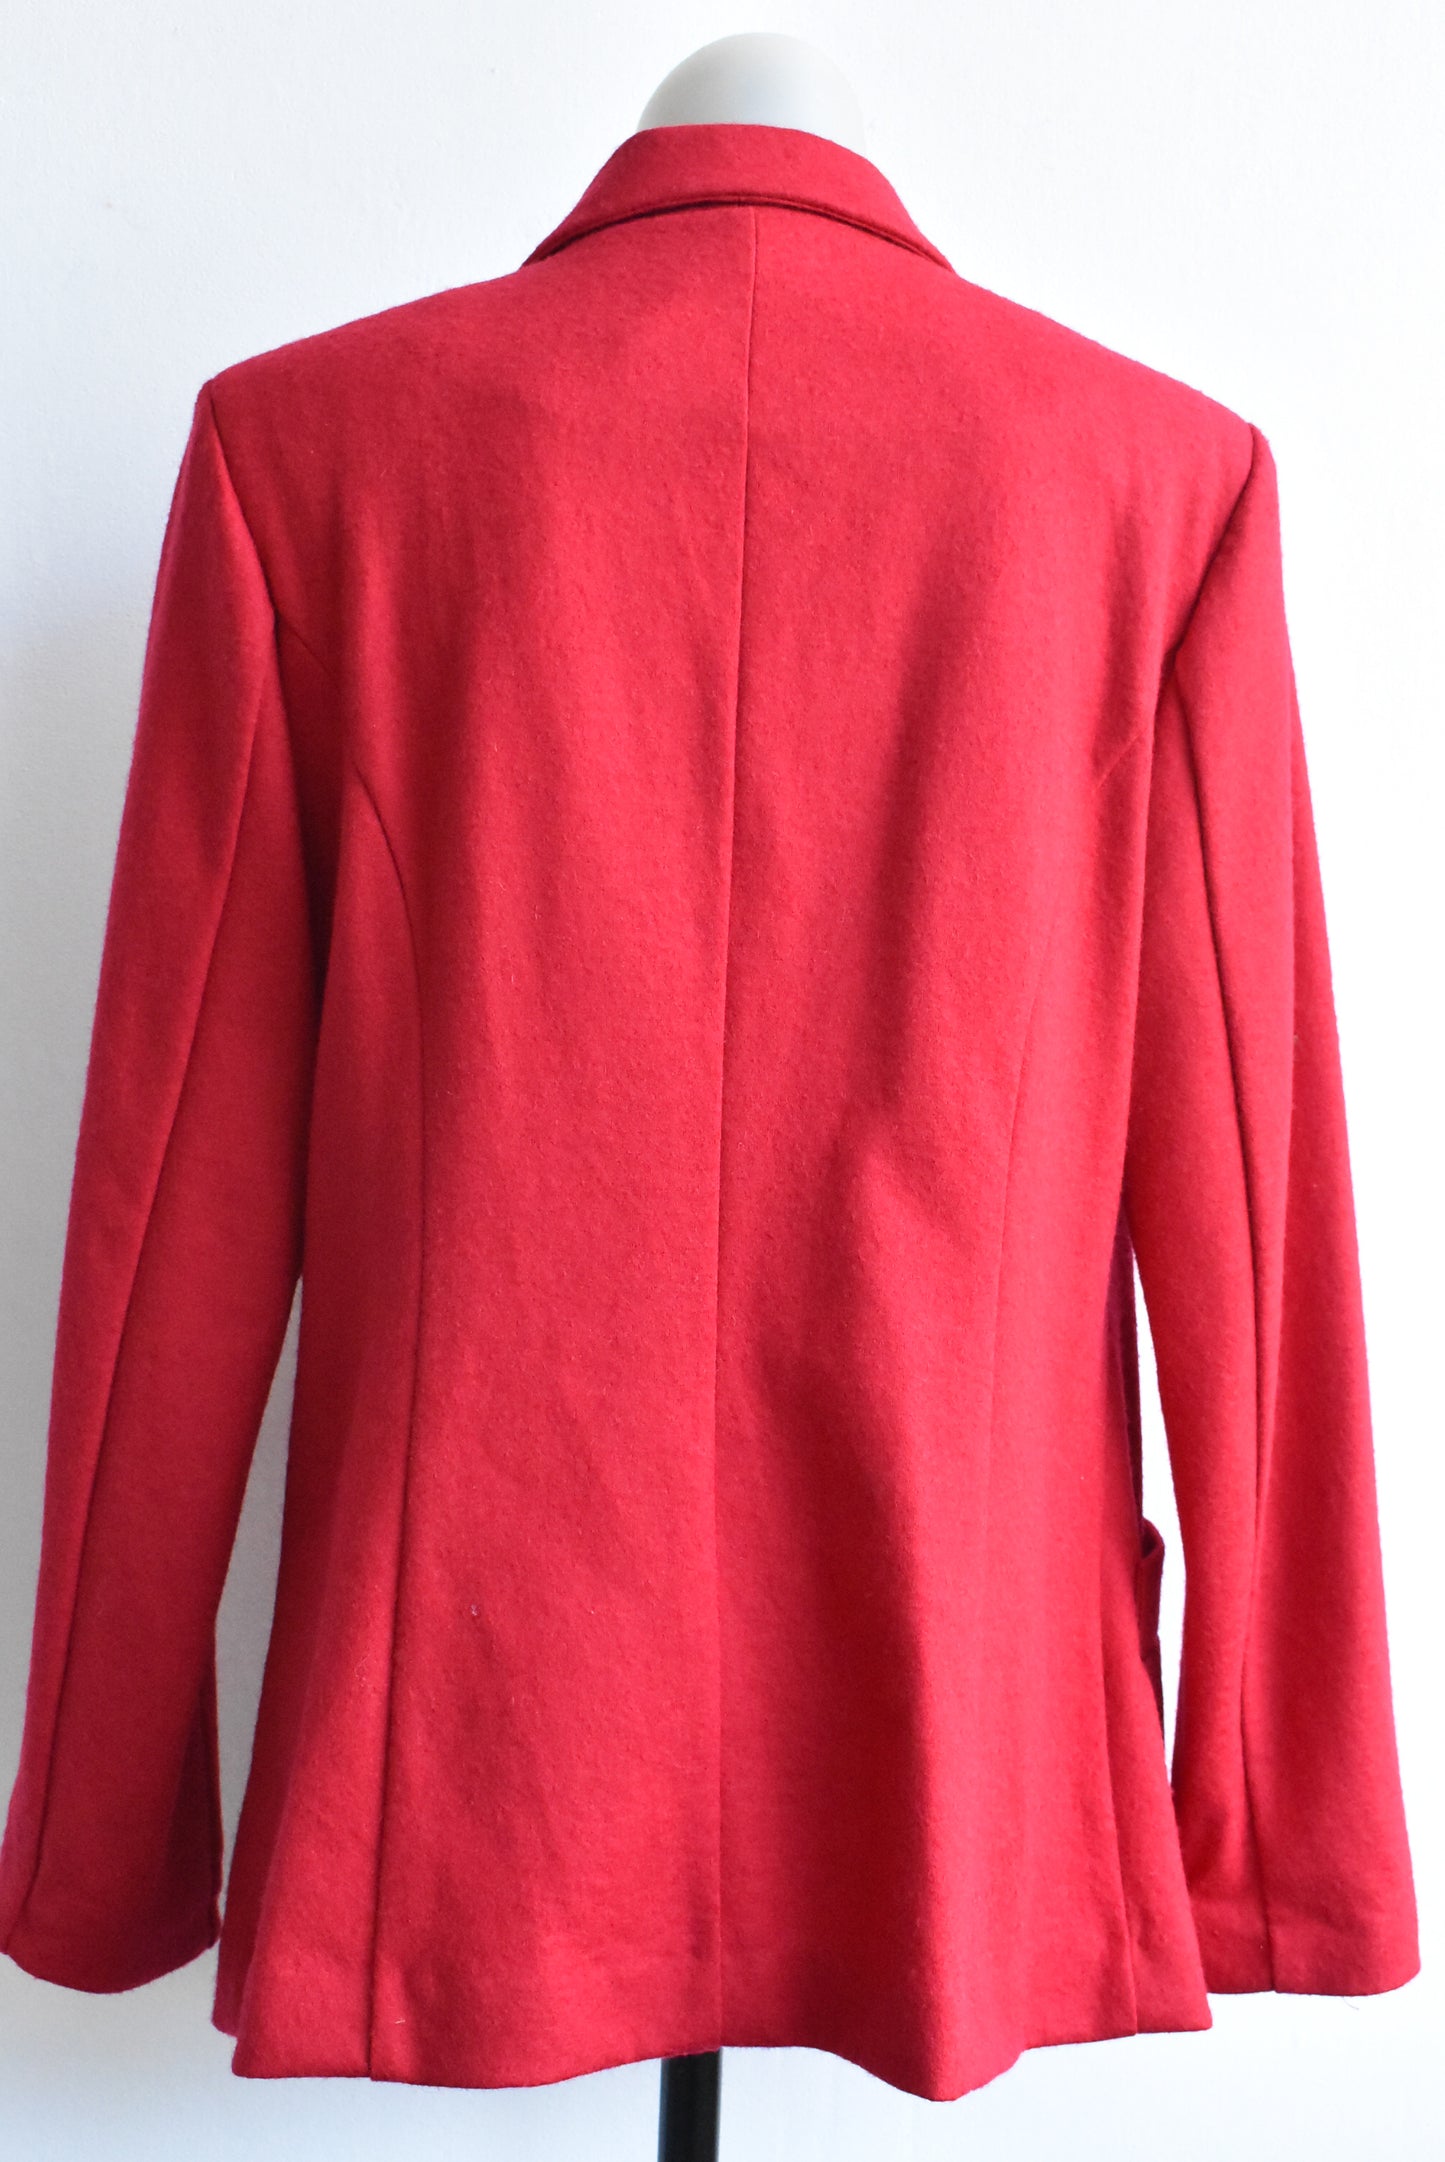 Café wool-blend red coat, size 12